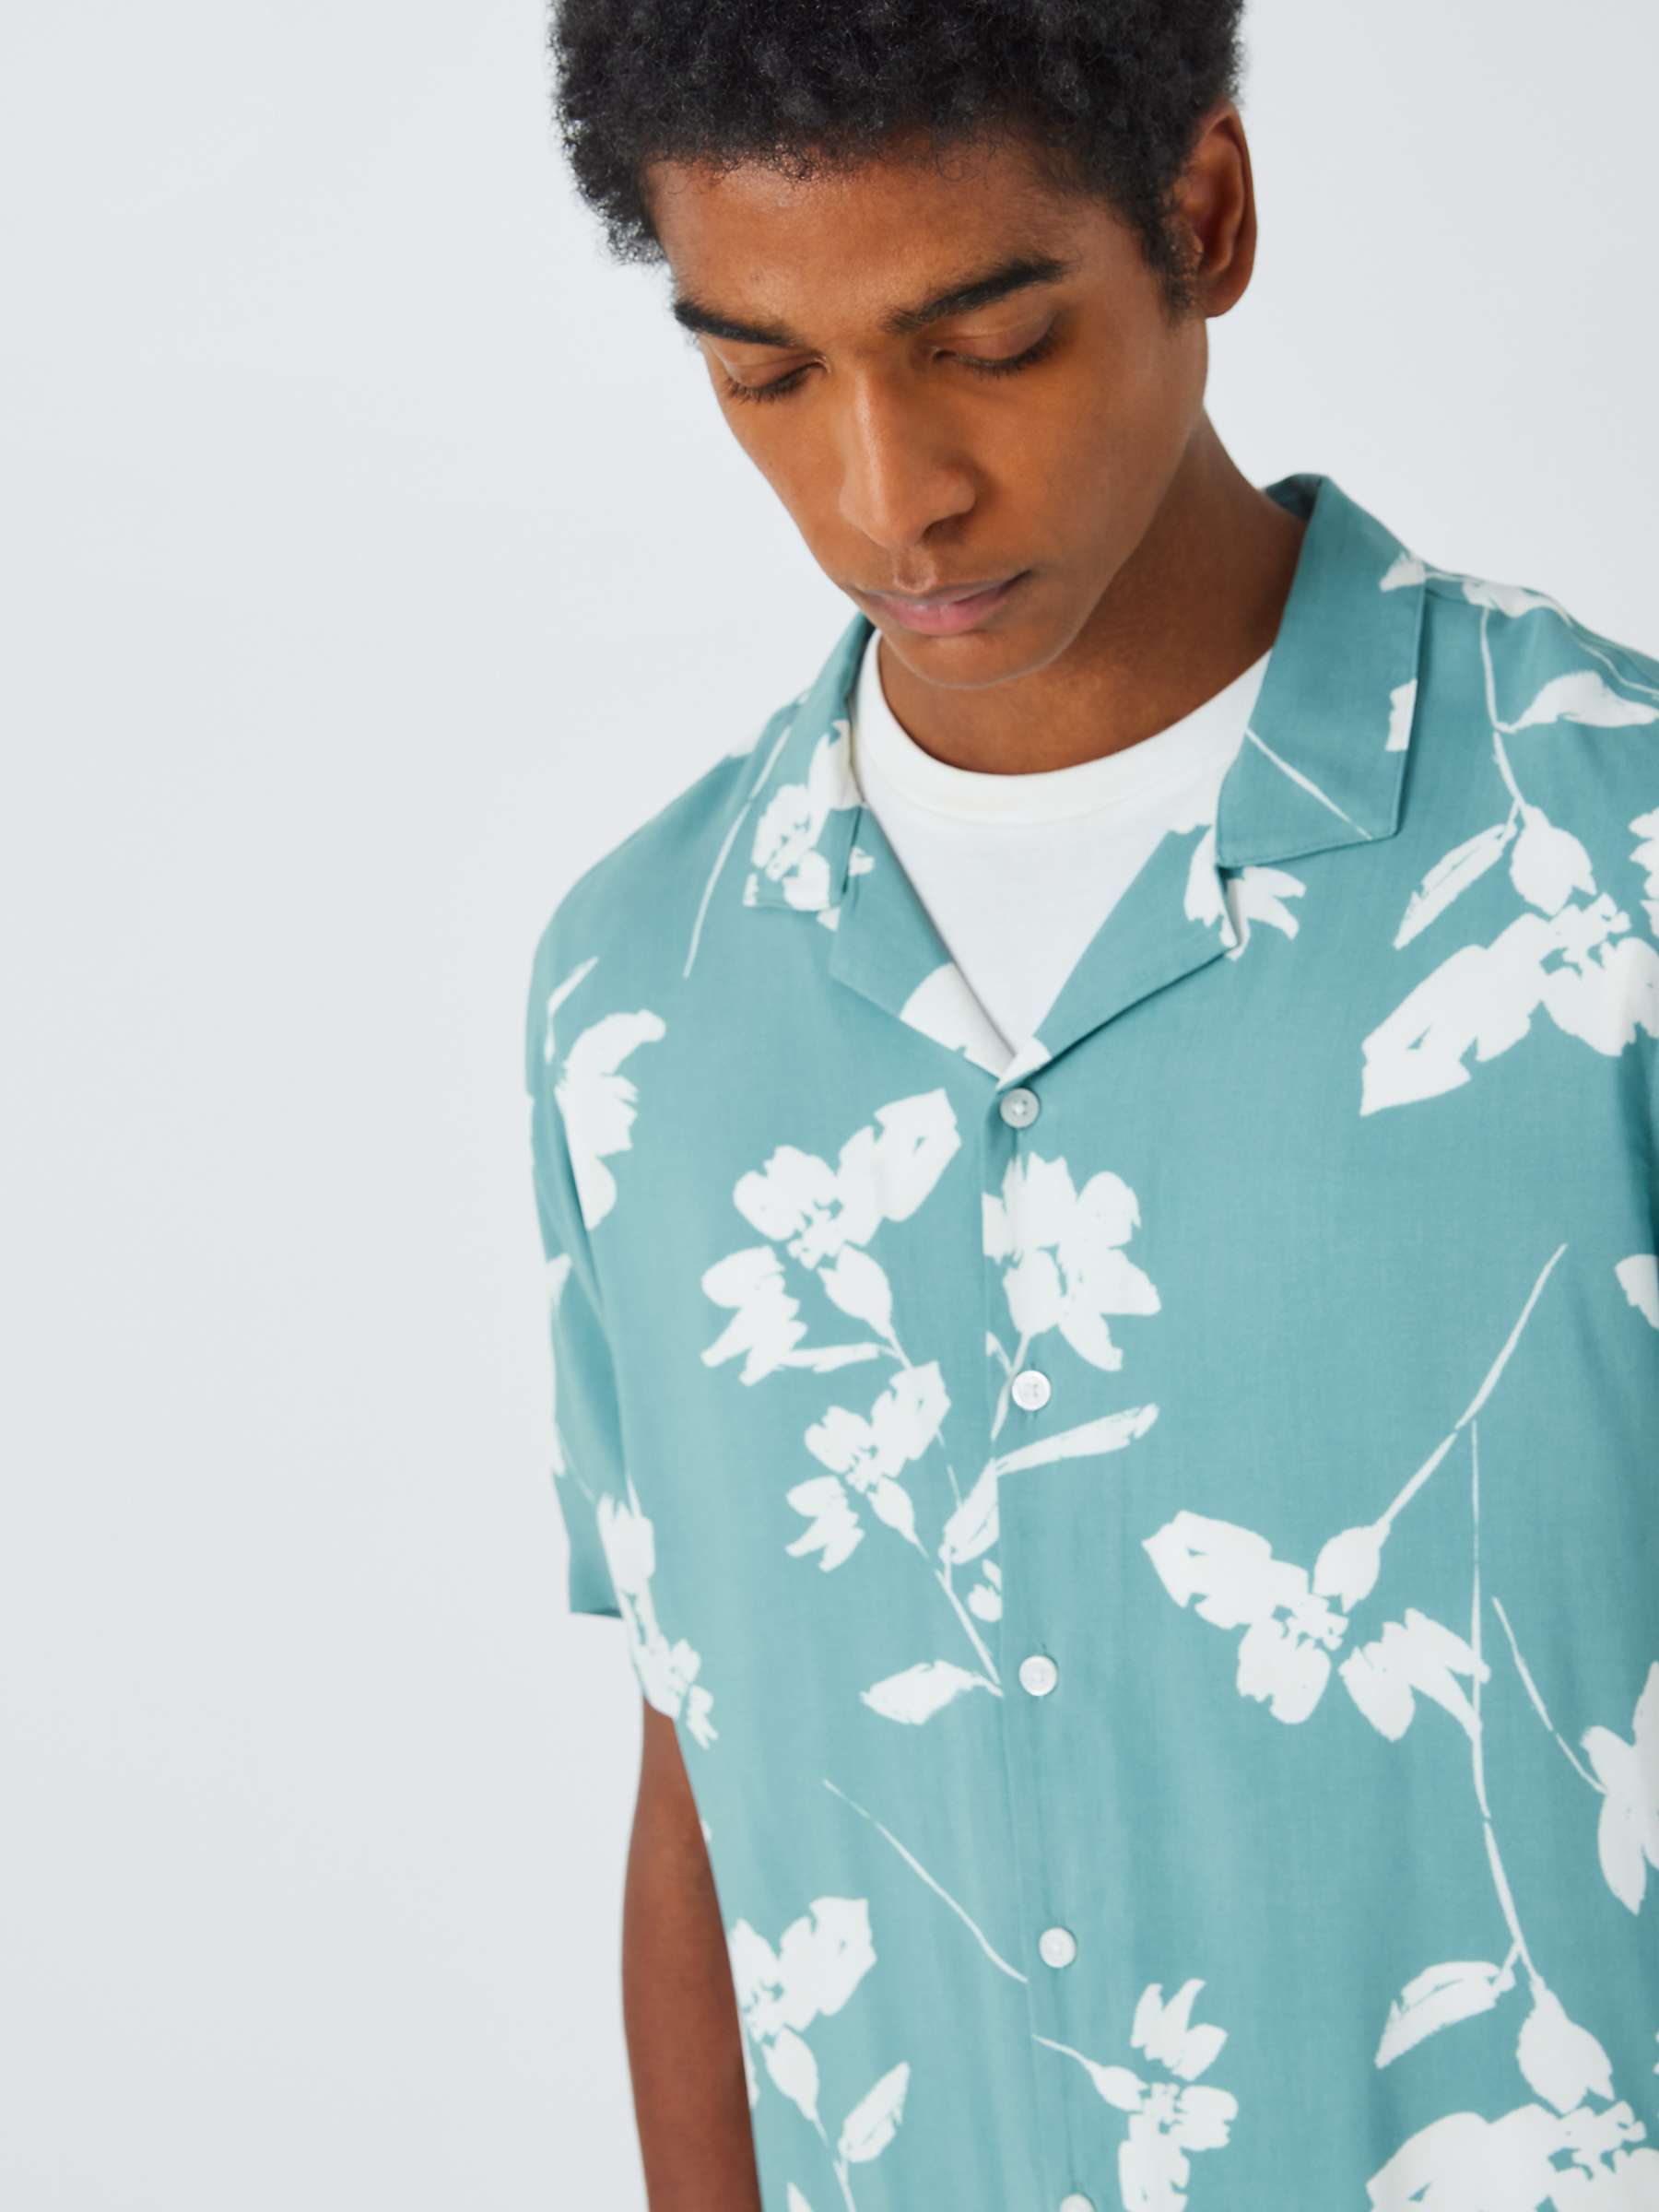 Buy Kin Floral LENZING™ ECOVERO™ VISCOSE Revere Collar Short Sleeve Shirt Online at johnlewis.com